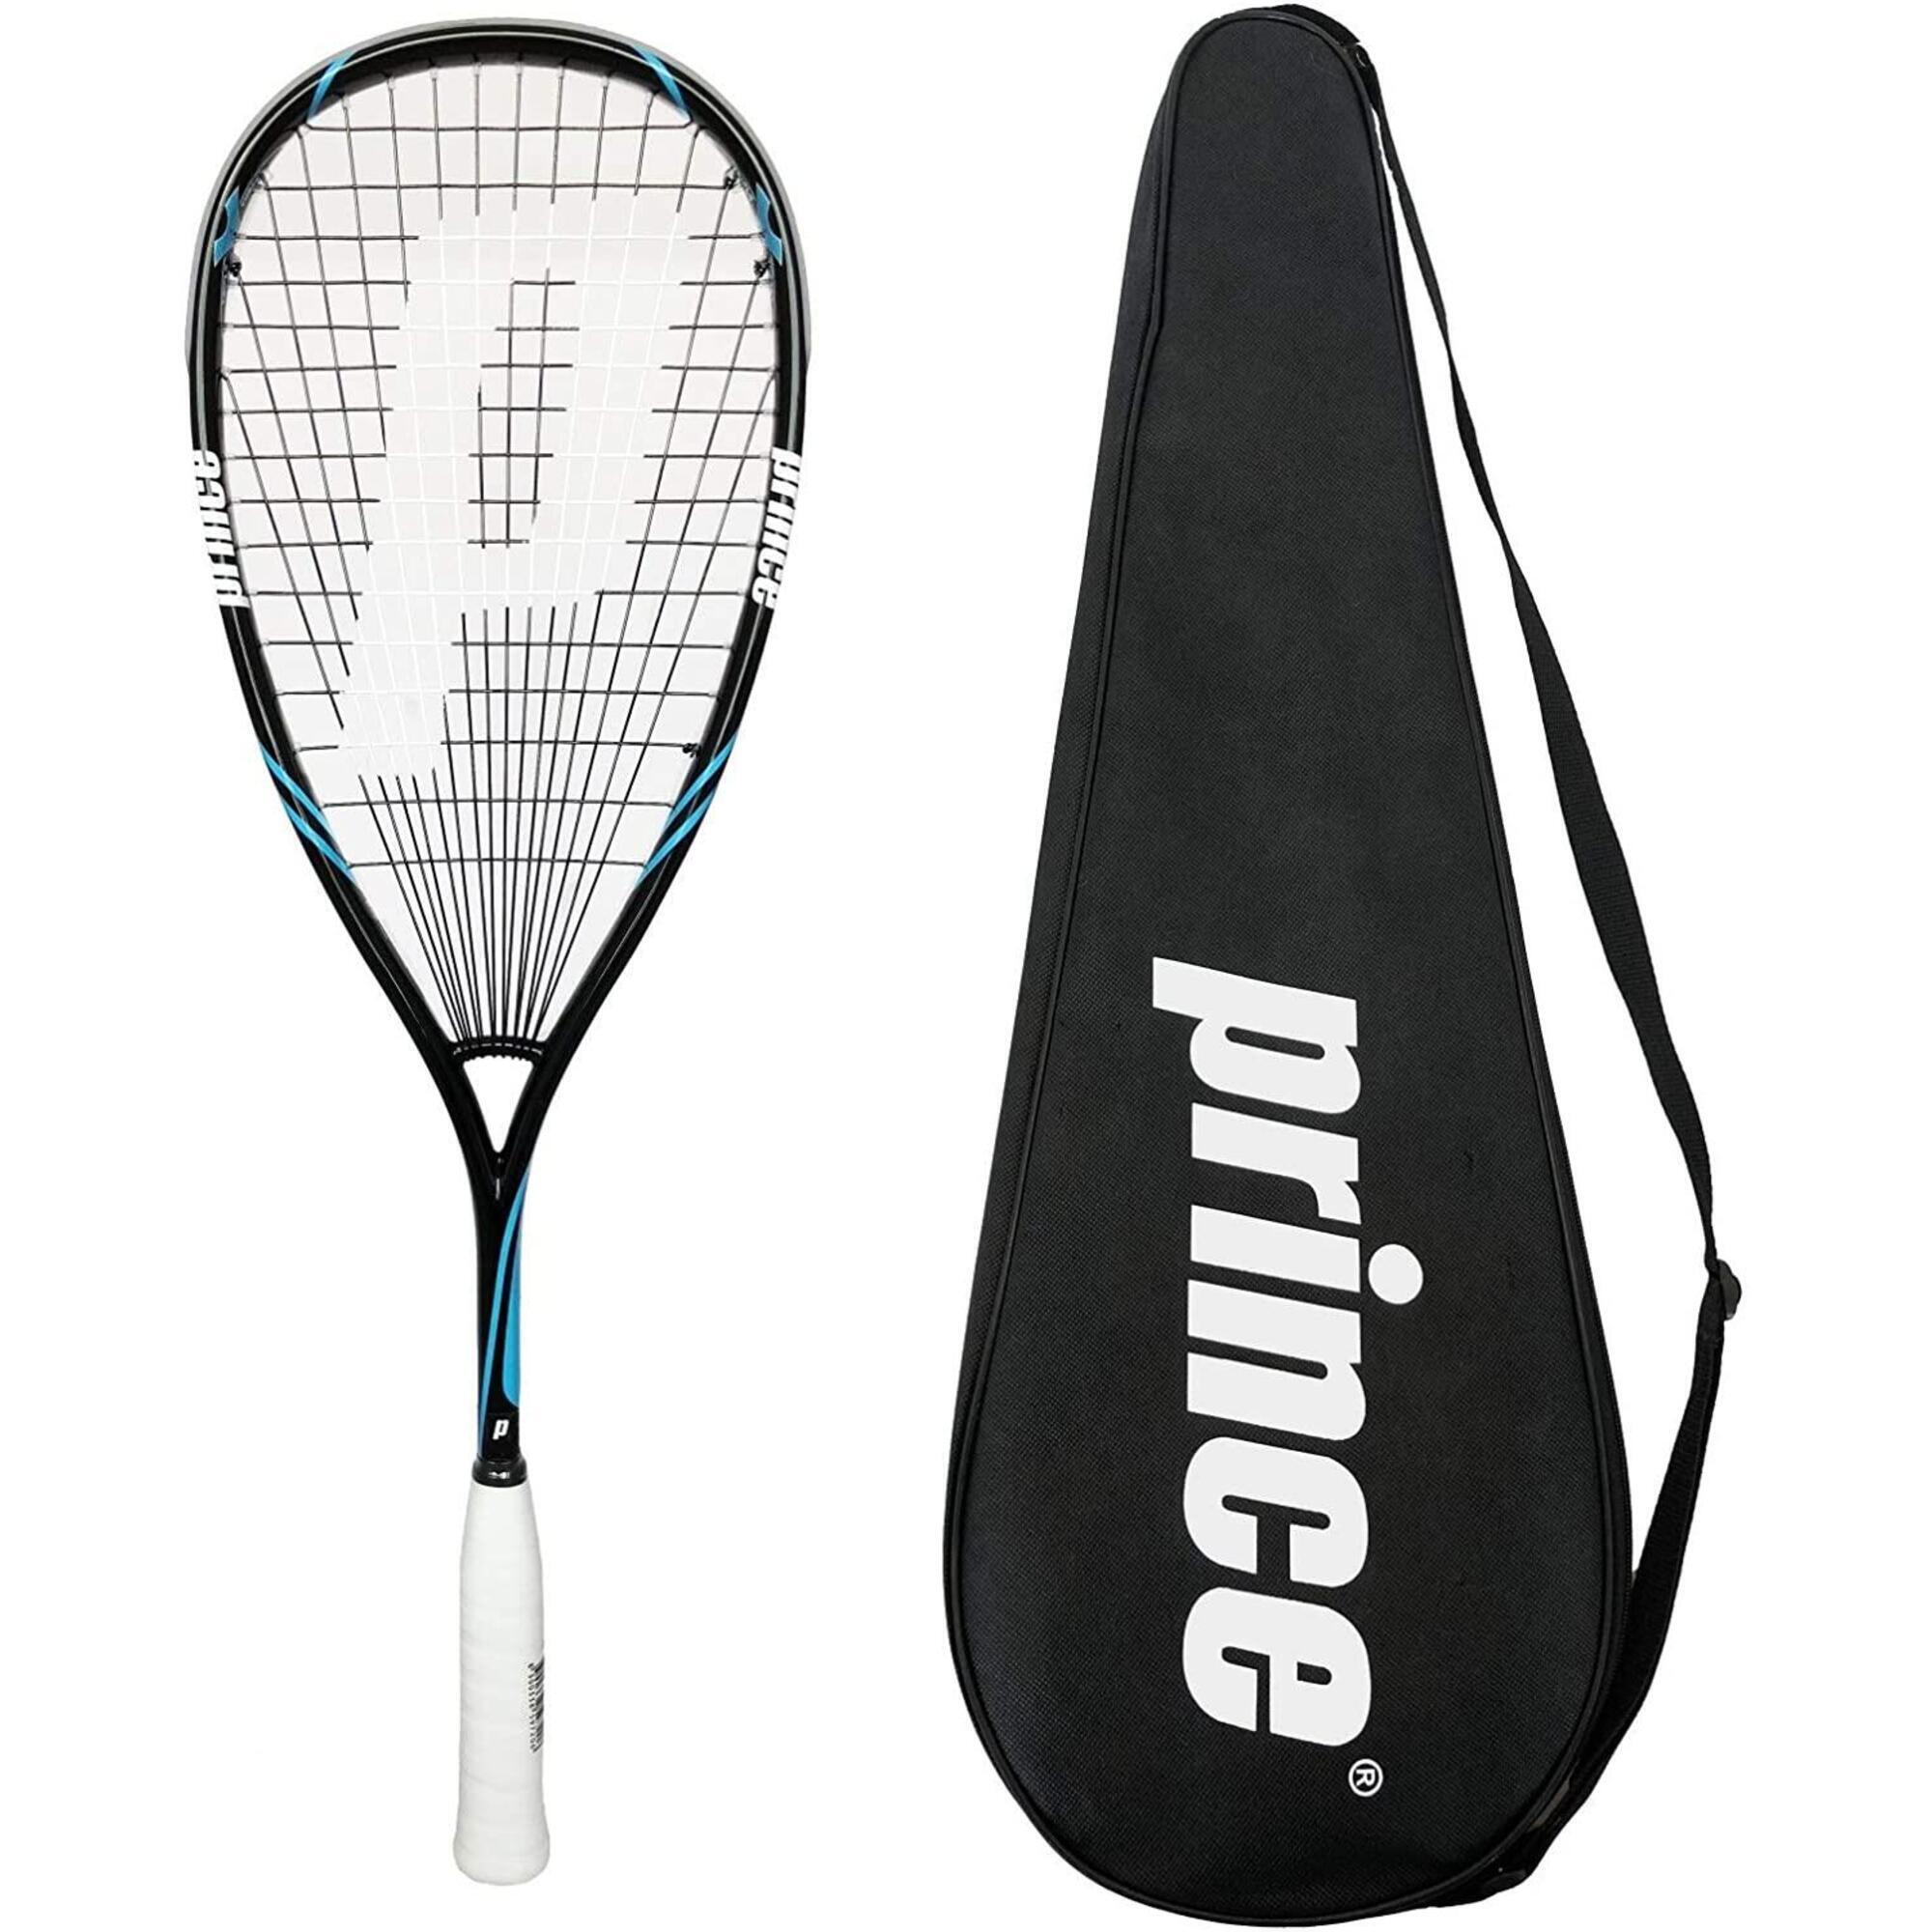 PRINCE Prince Pro Shark 650 POWERBITE Squash Racket inc Protective Cover